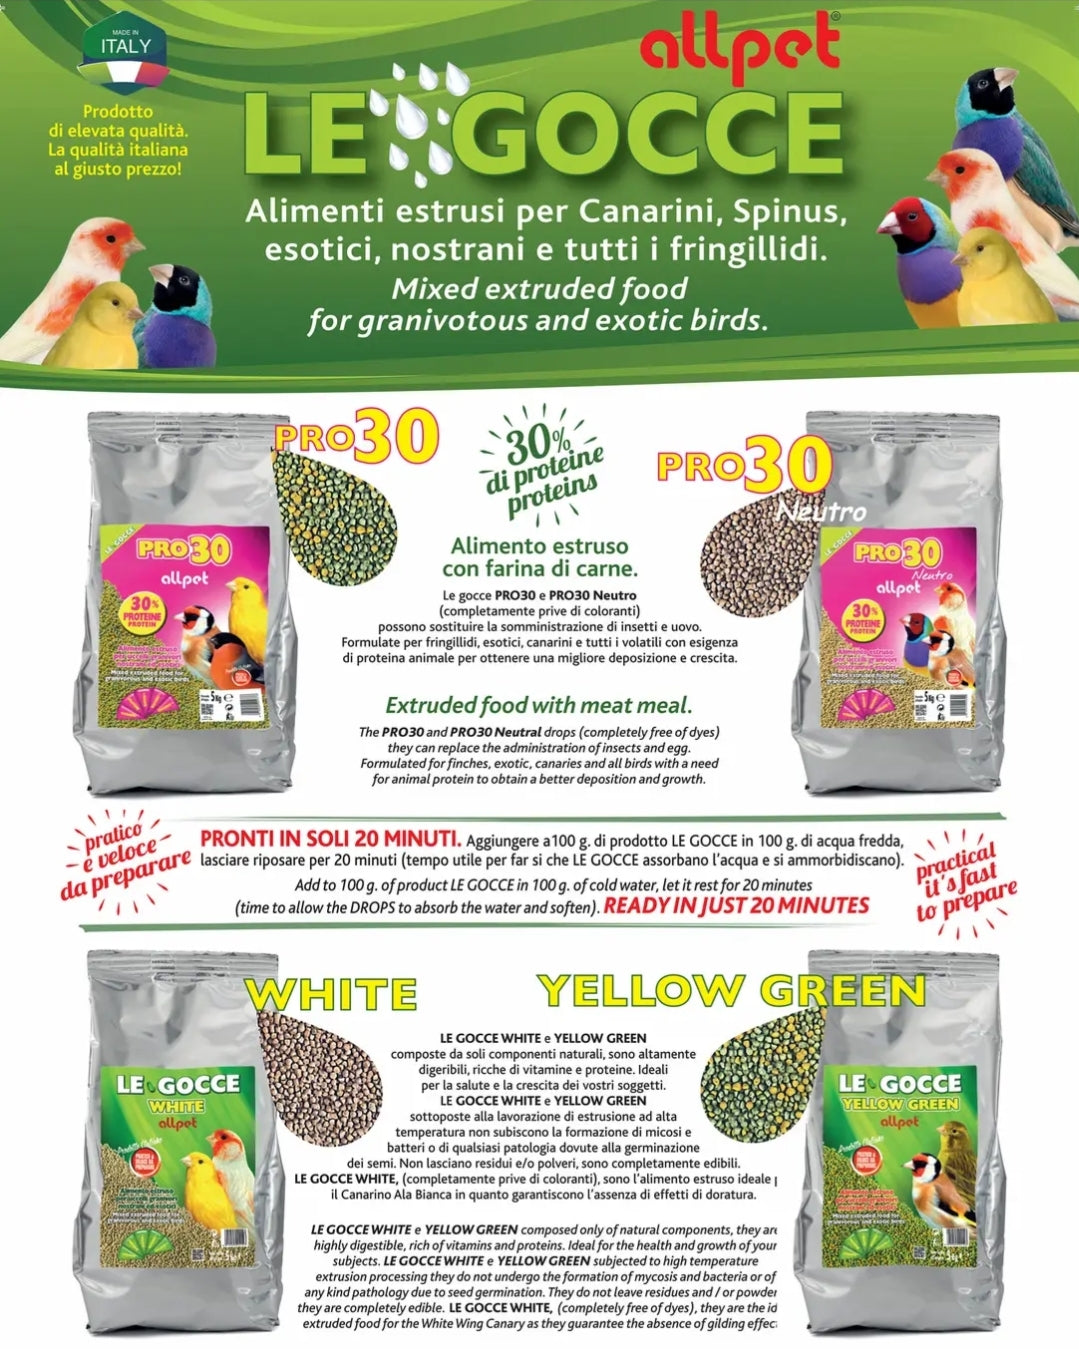 Le Gocce Yellow Green 450 gram ( kiemzaad vervanger ) - All Pet